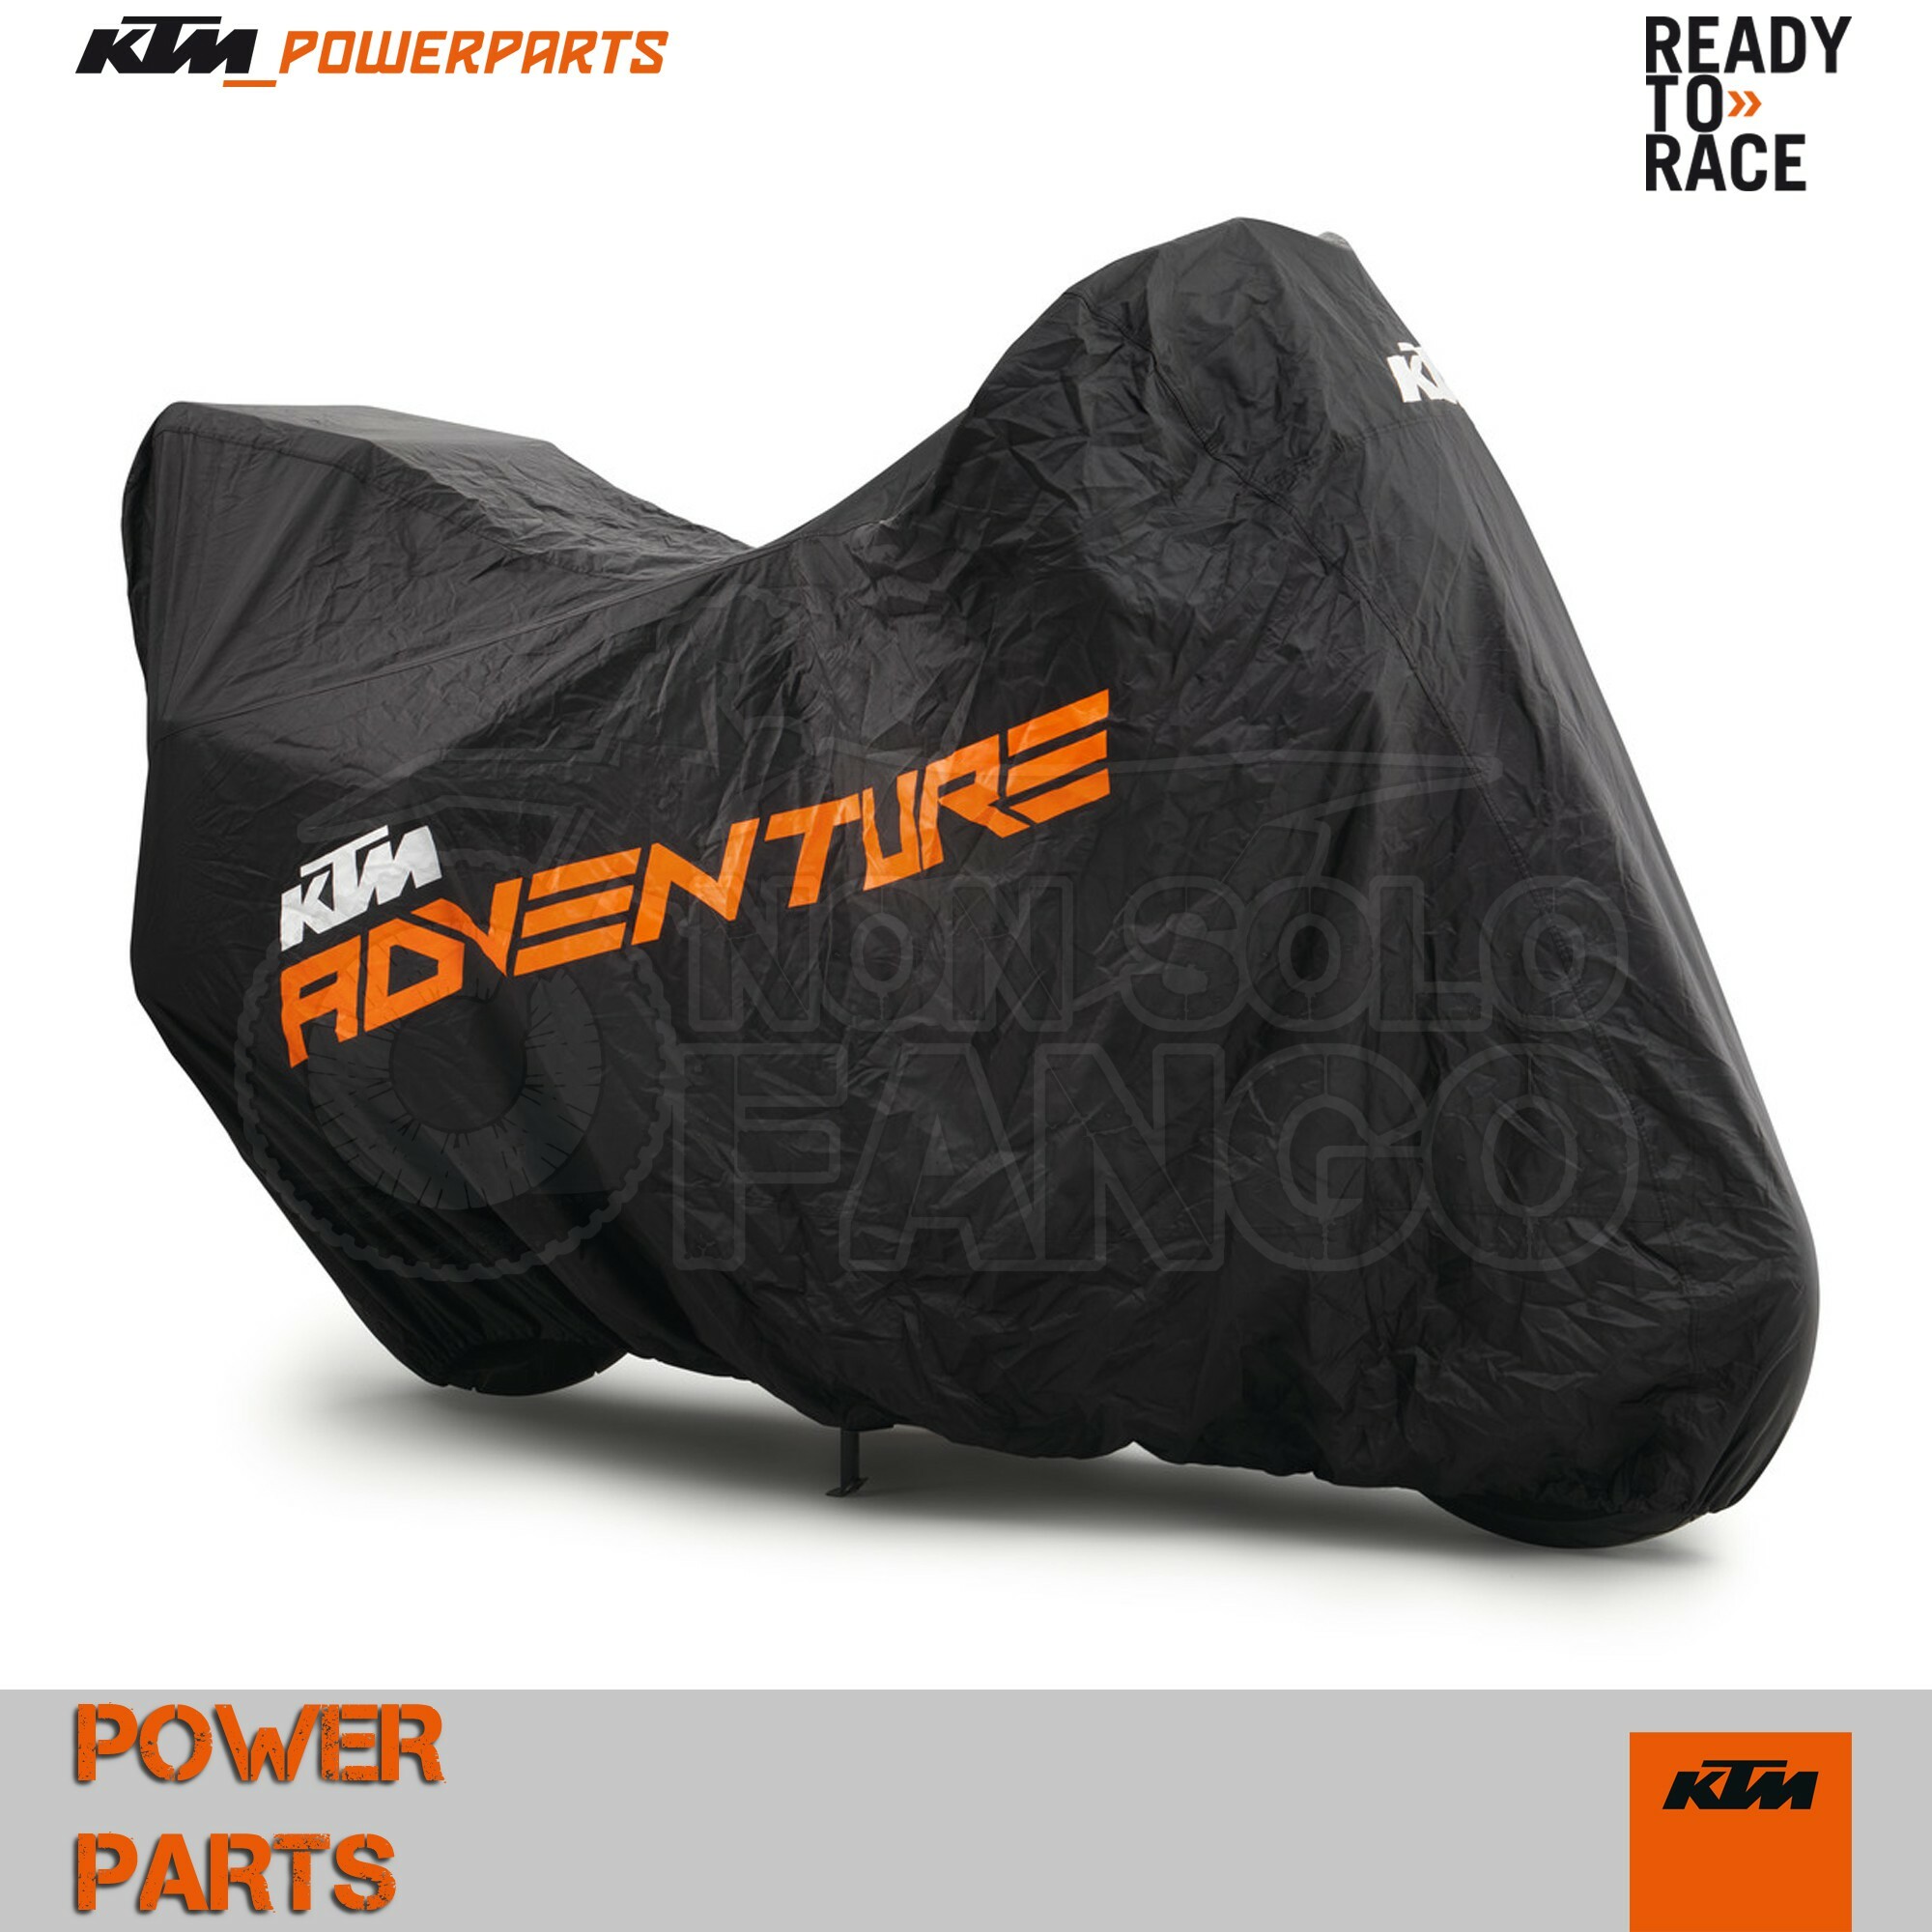 Telo coprimoto Adventure KTM Power Parts